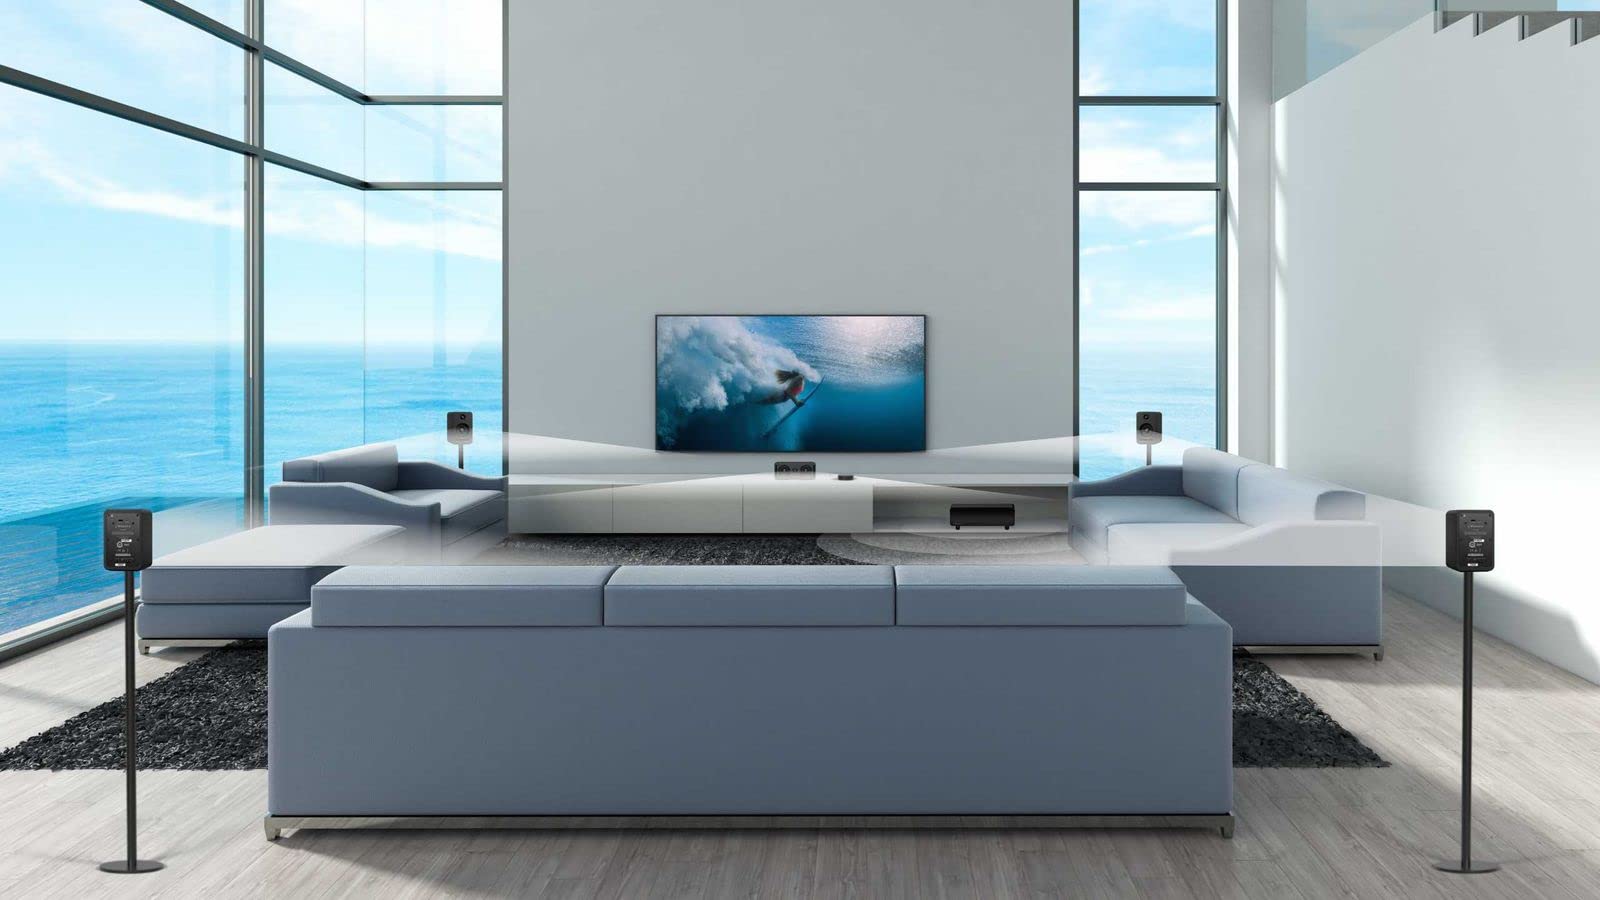 Platin Monaco 5.1.2 Home Theater System - Wireless Surround Sound System Upward Firing Speakers - THX Tuned & WiSA Certified